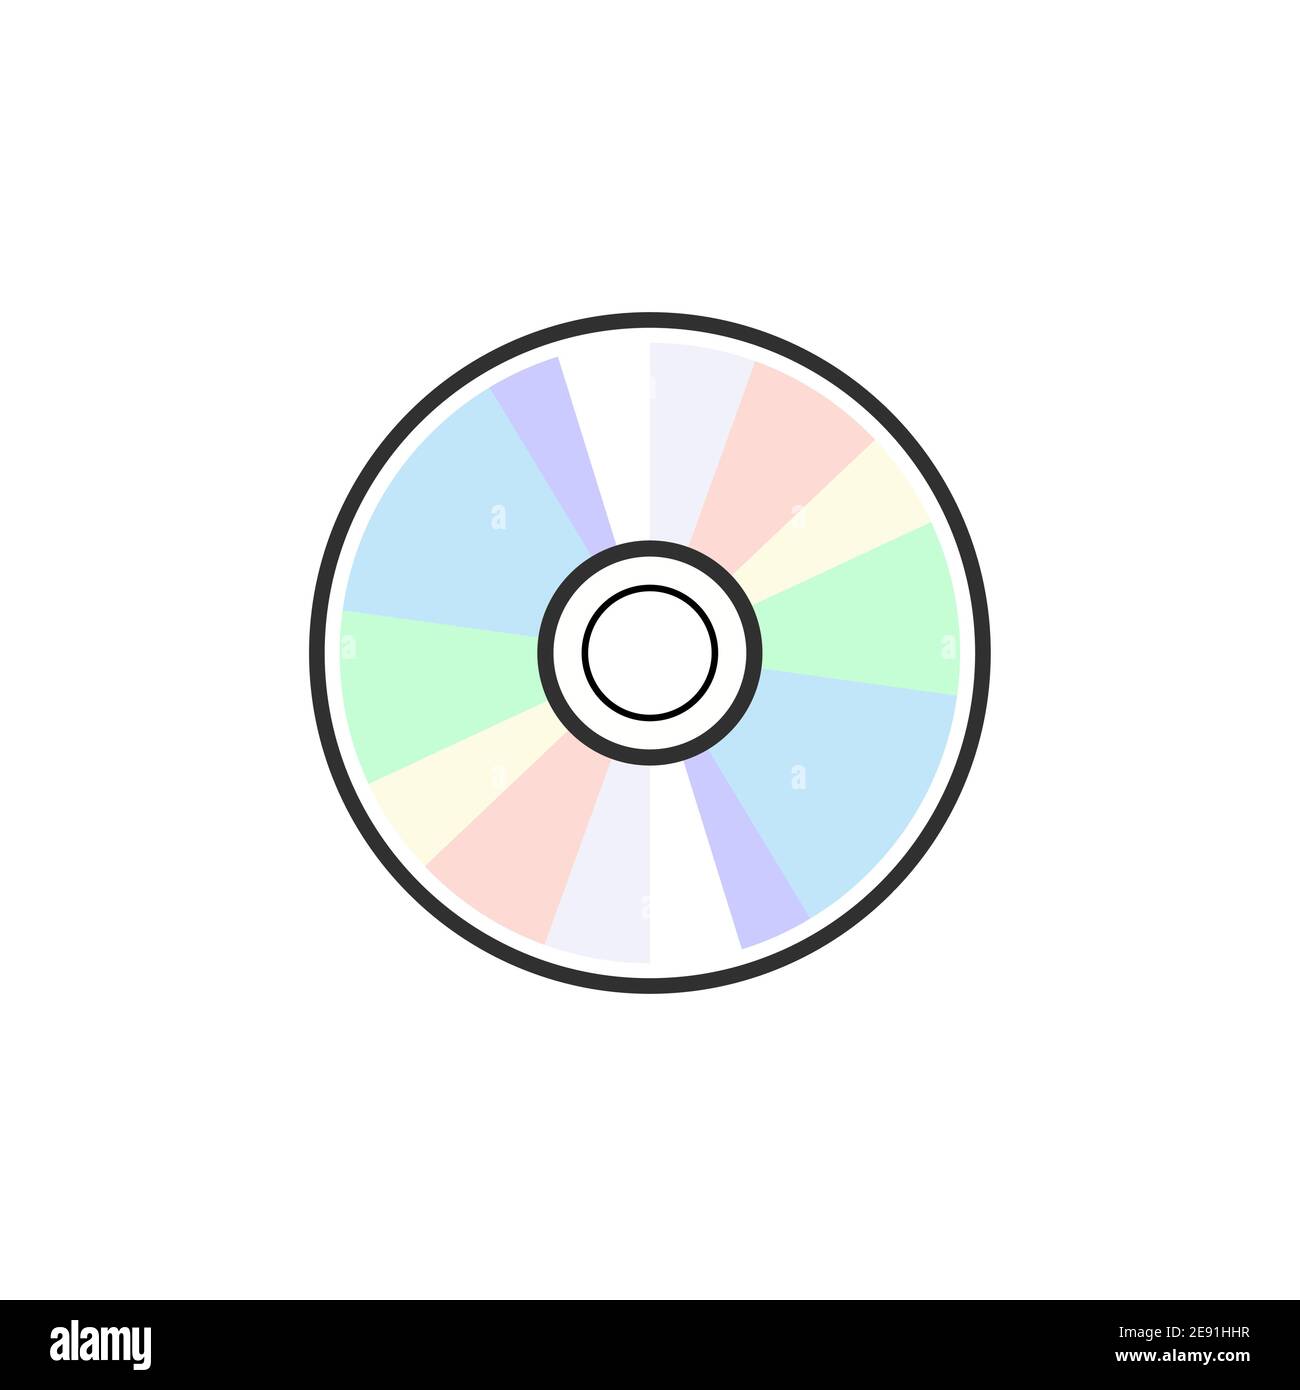 https://c8.alamy.com/comp/2E91HHR/cd-dvd-icon-disc-vector-blank-illustration-compact-disk-dvd-music-audio-2E91HHR.jpg